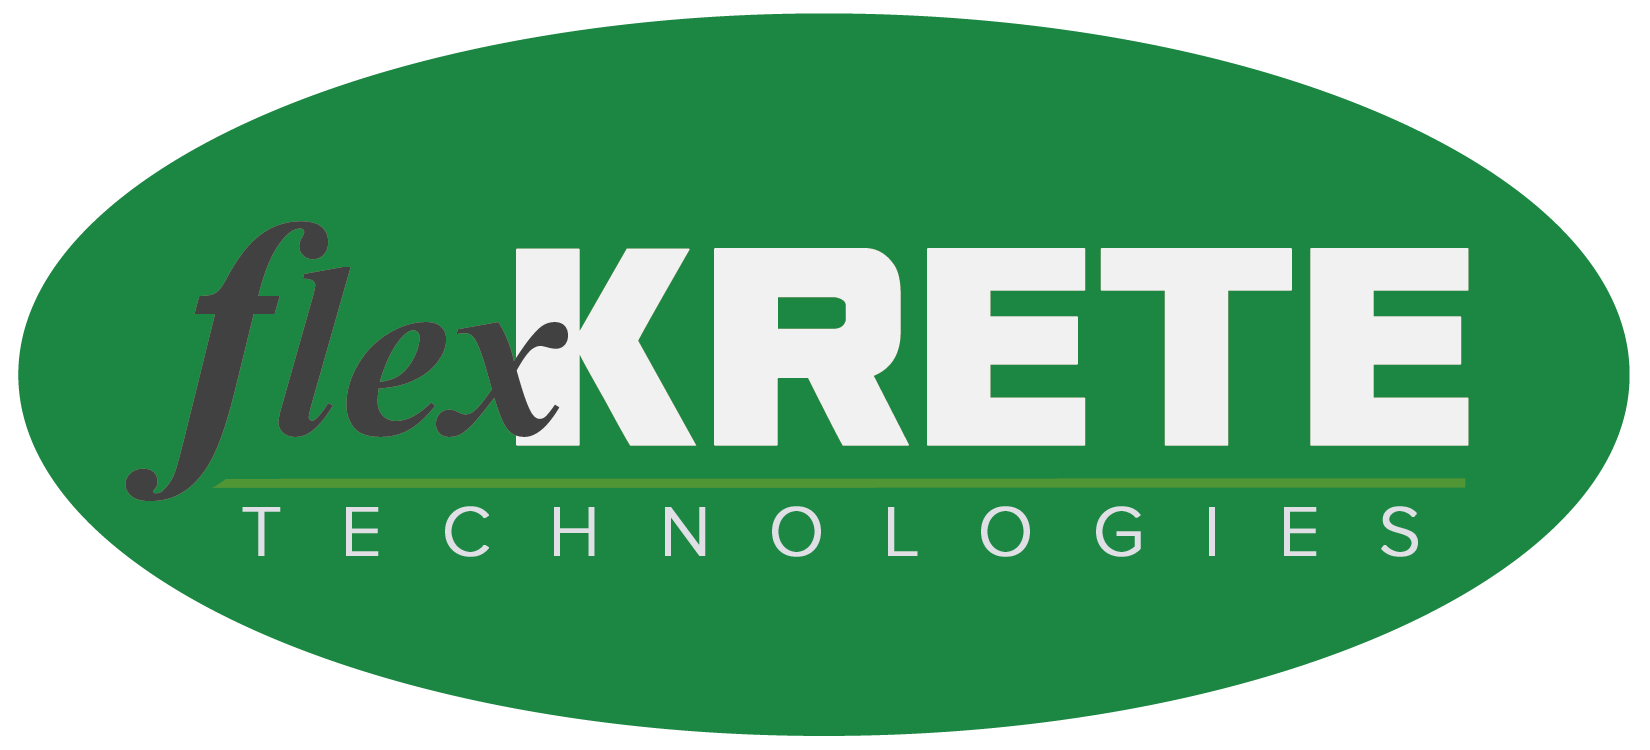 FlexKrete Technologies logo